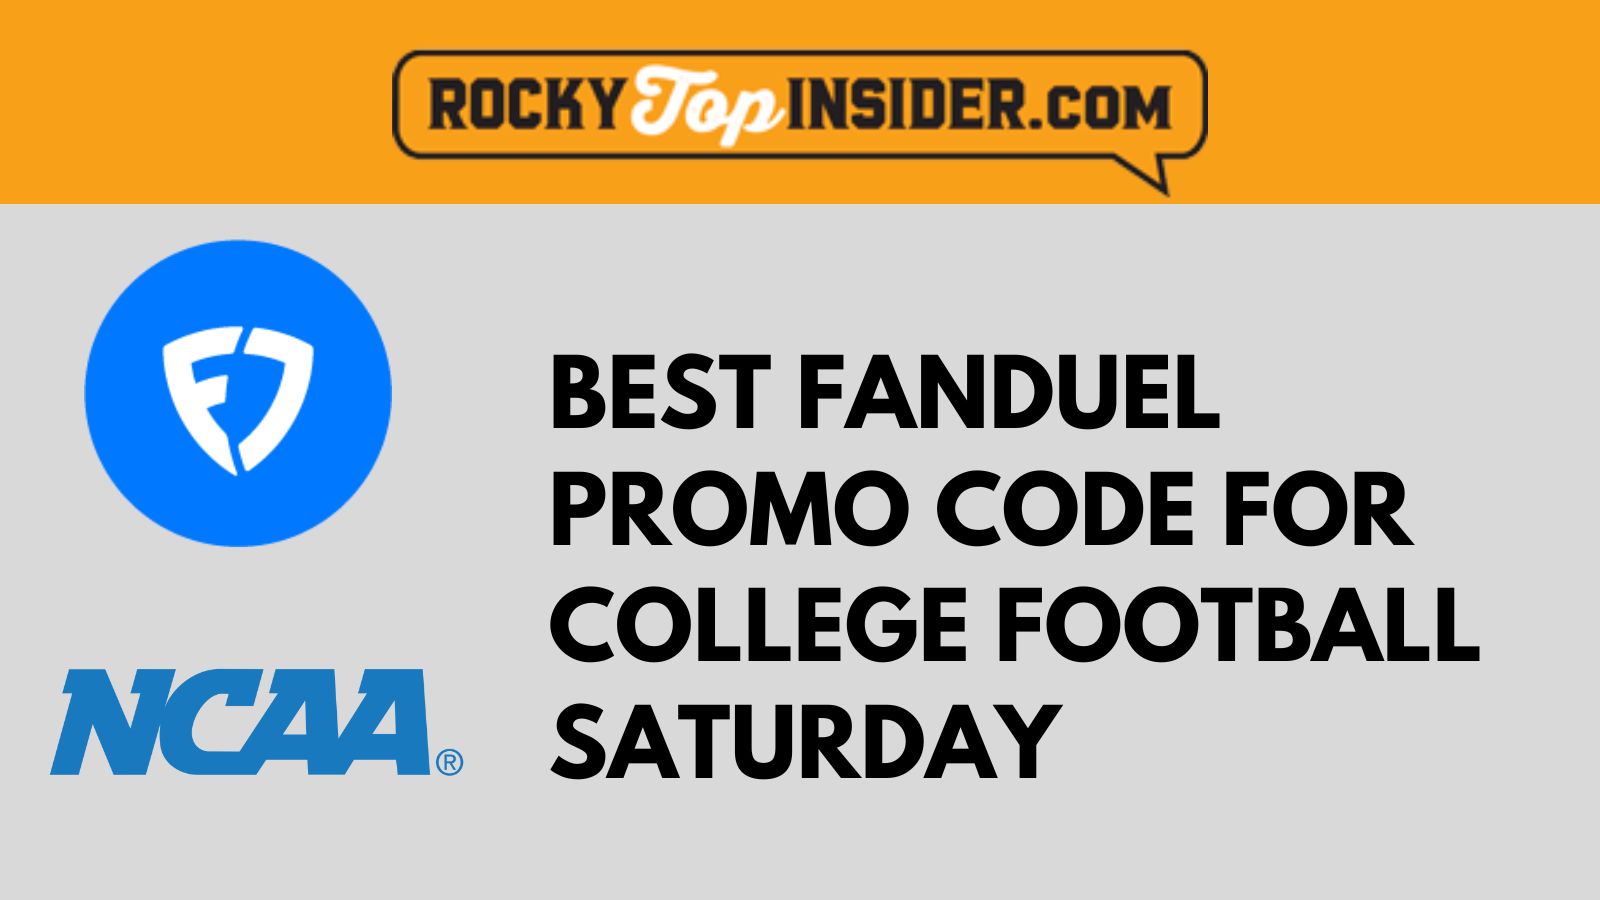 Big Bonus Comes With FanDuel Promo Code for College Football